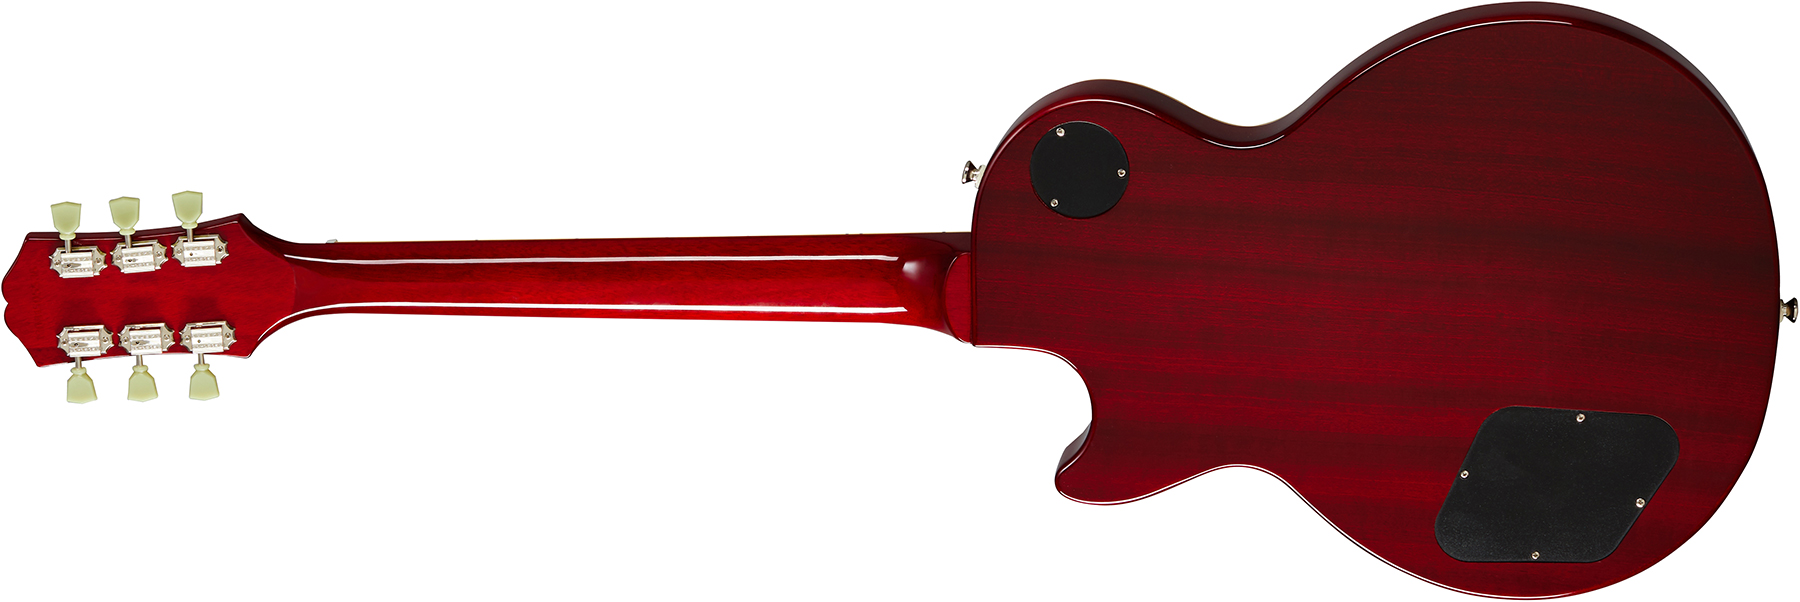 Epiphone Les Paul Standard 50s 2h Ht Rw - Heritage Cherry Sunburst - Single cut electric guitar - Variation 1